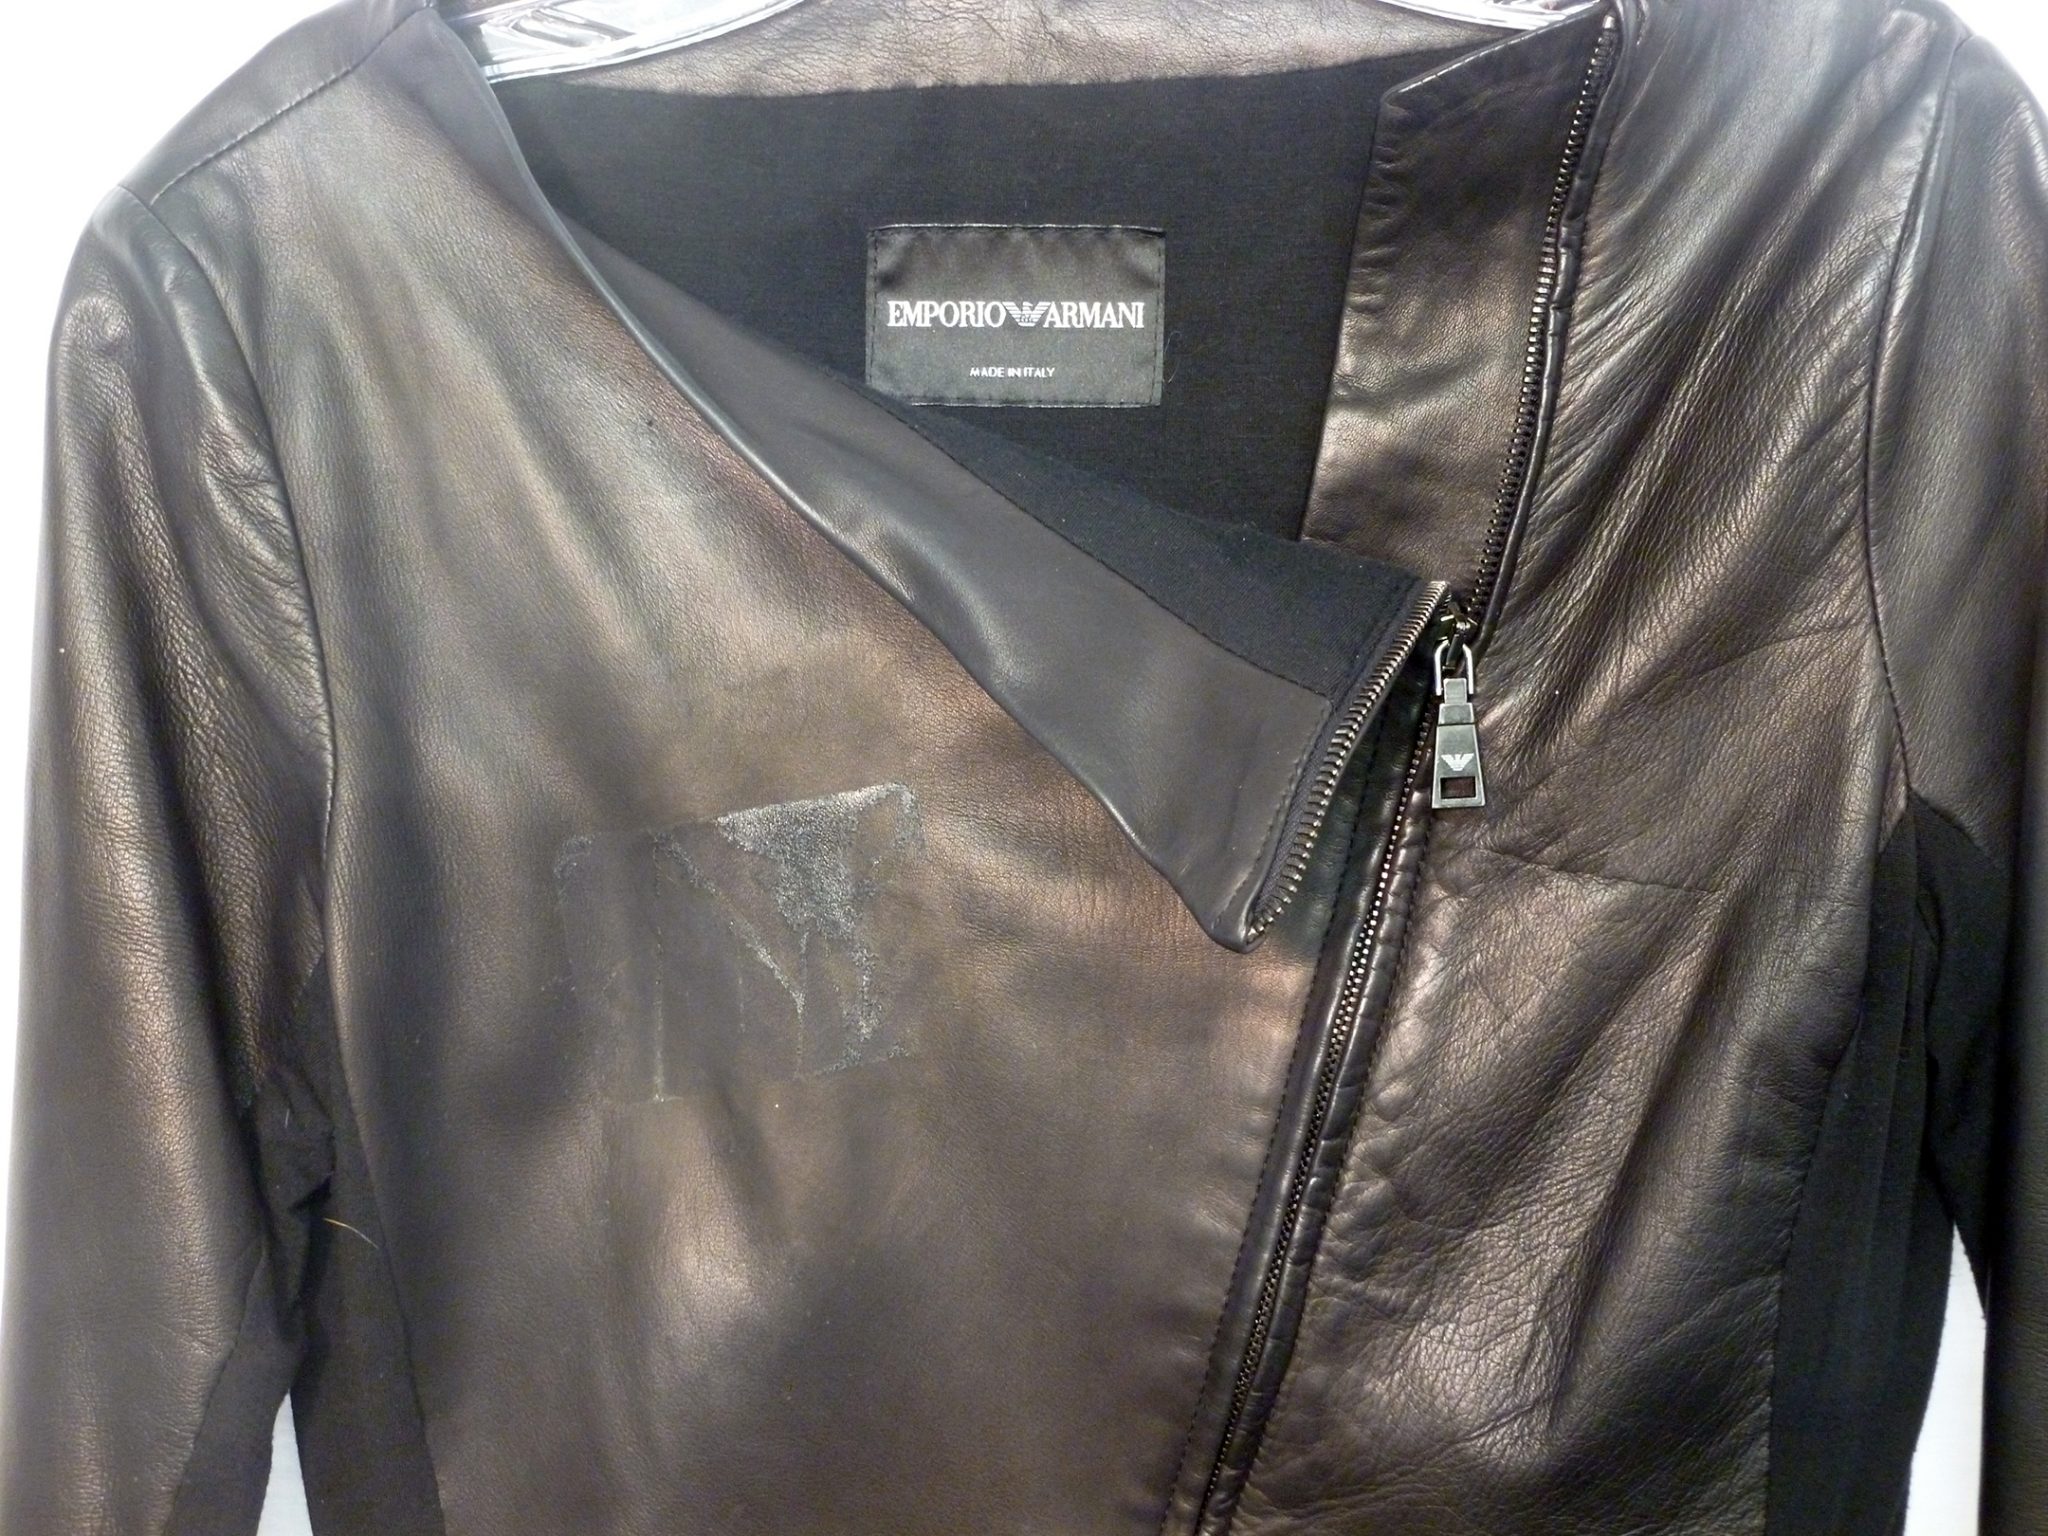 Armani Jacket with Sticker Damage - Ram Leather Care